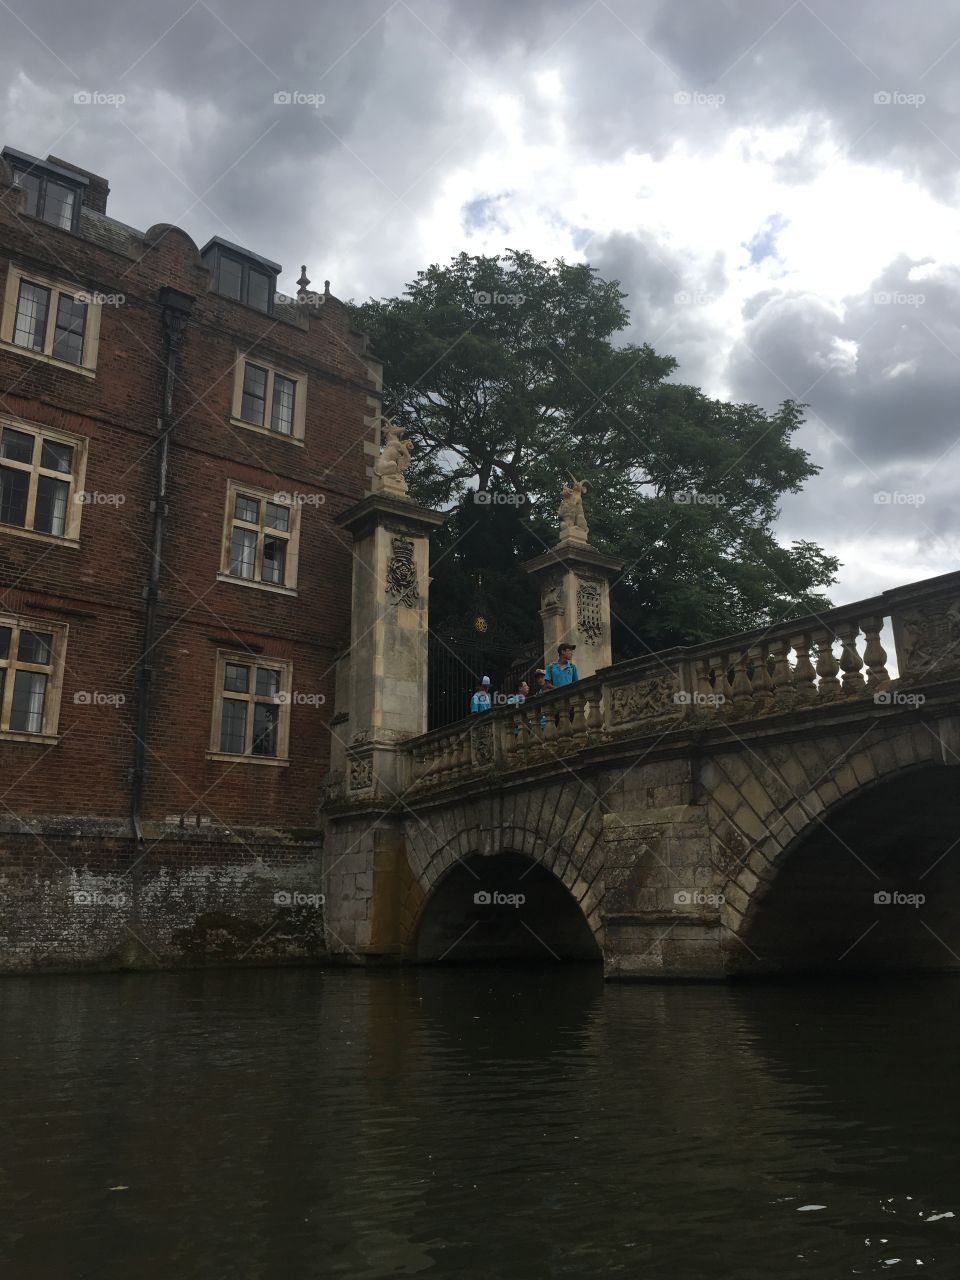 Views in Cambridge 